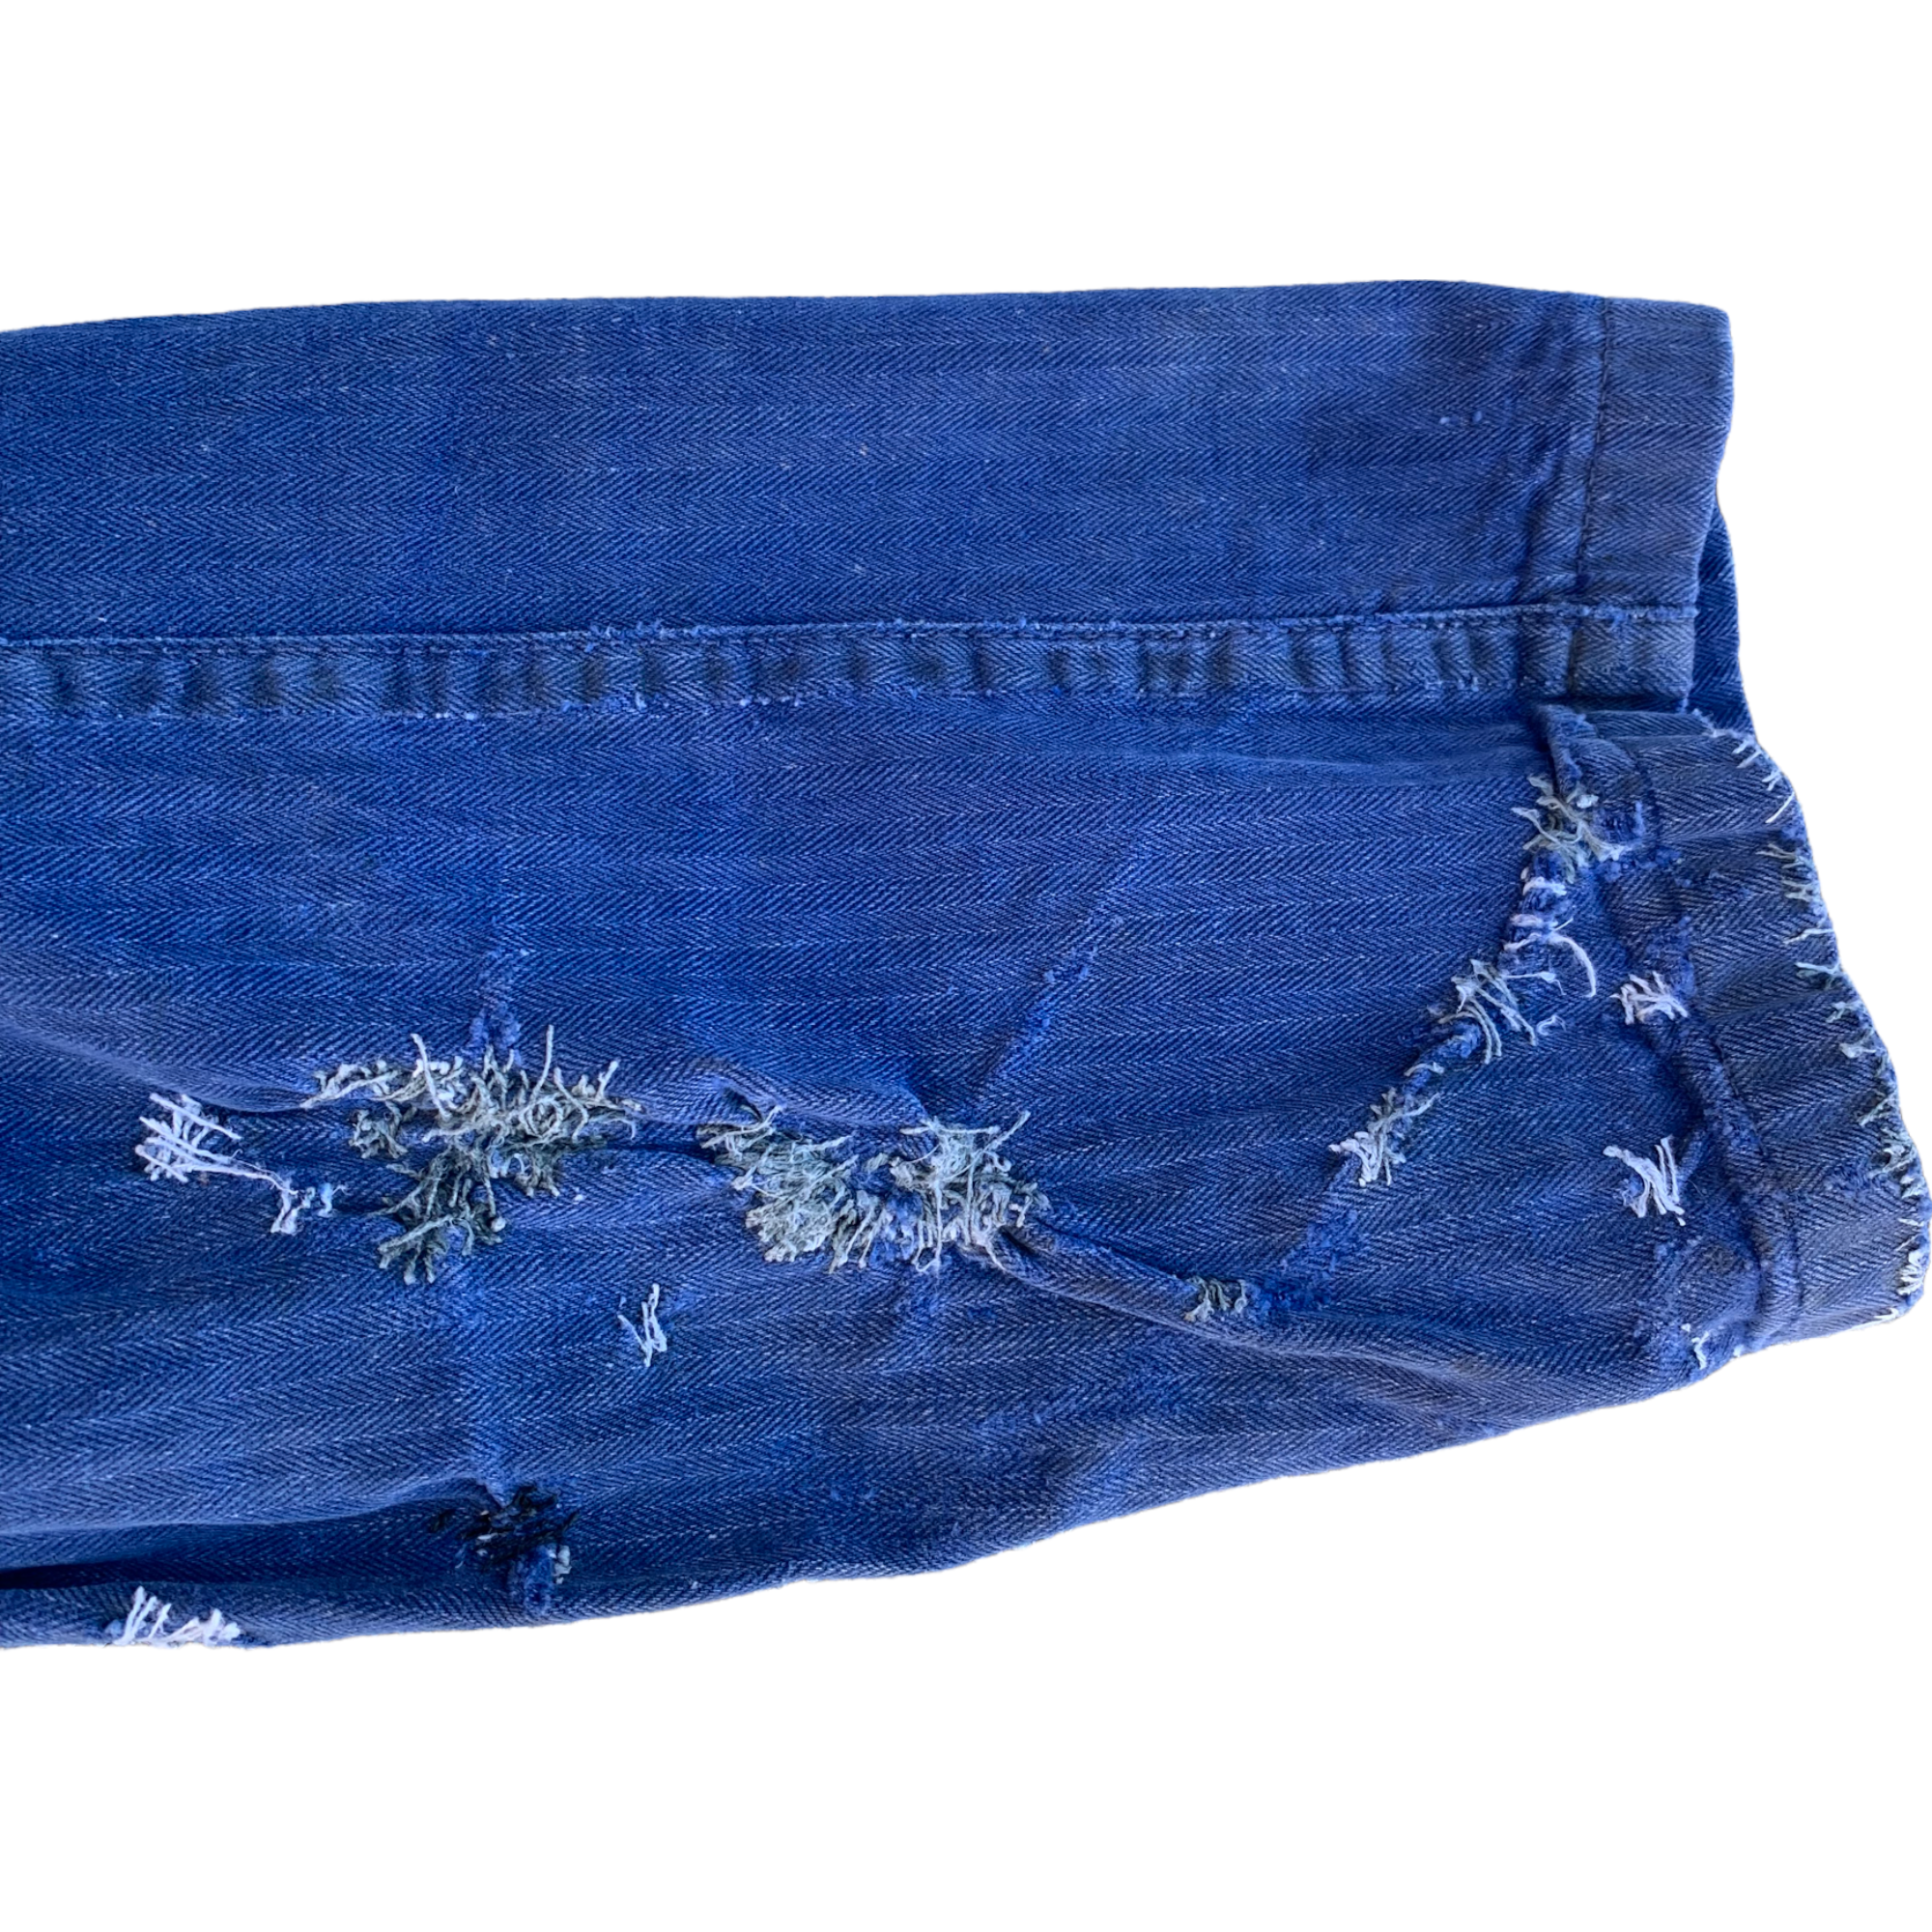 1950s Sashiko Repaired HBT Bleu De Travail French Chore Jacket - Faded Indigo Blue - S/M